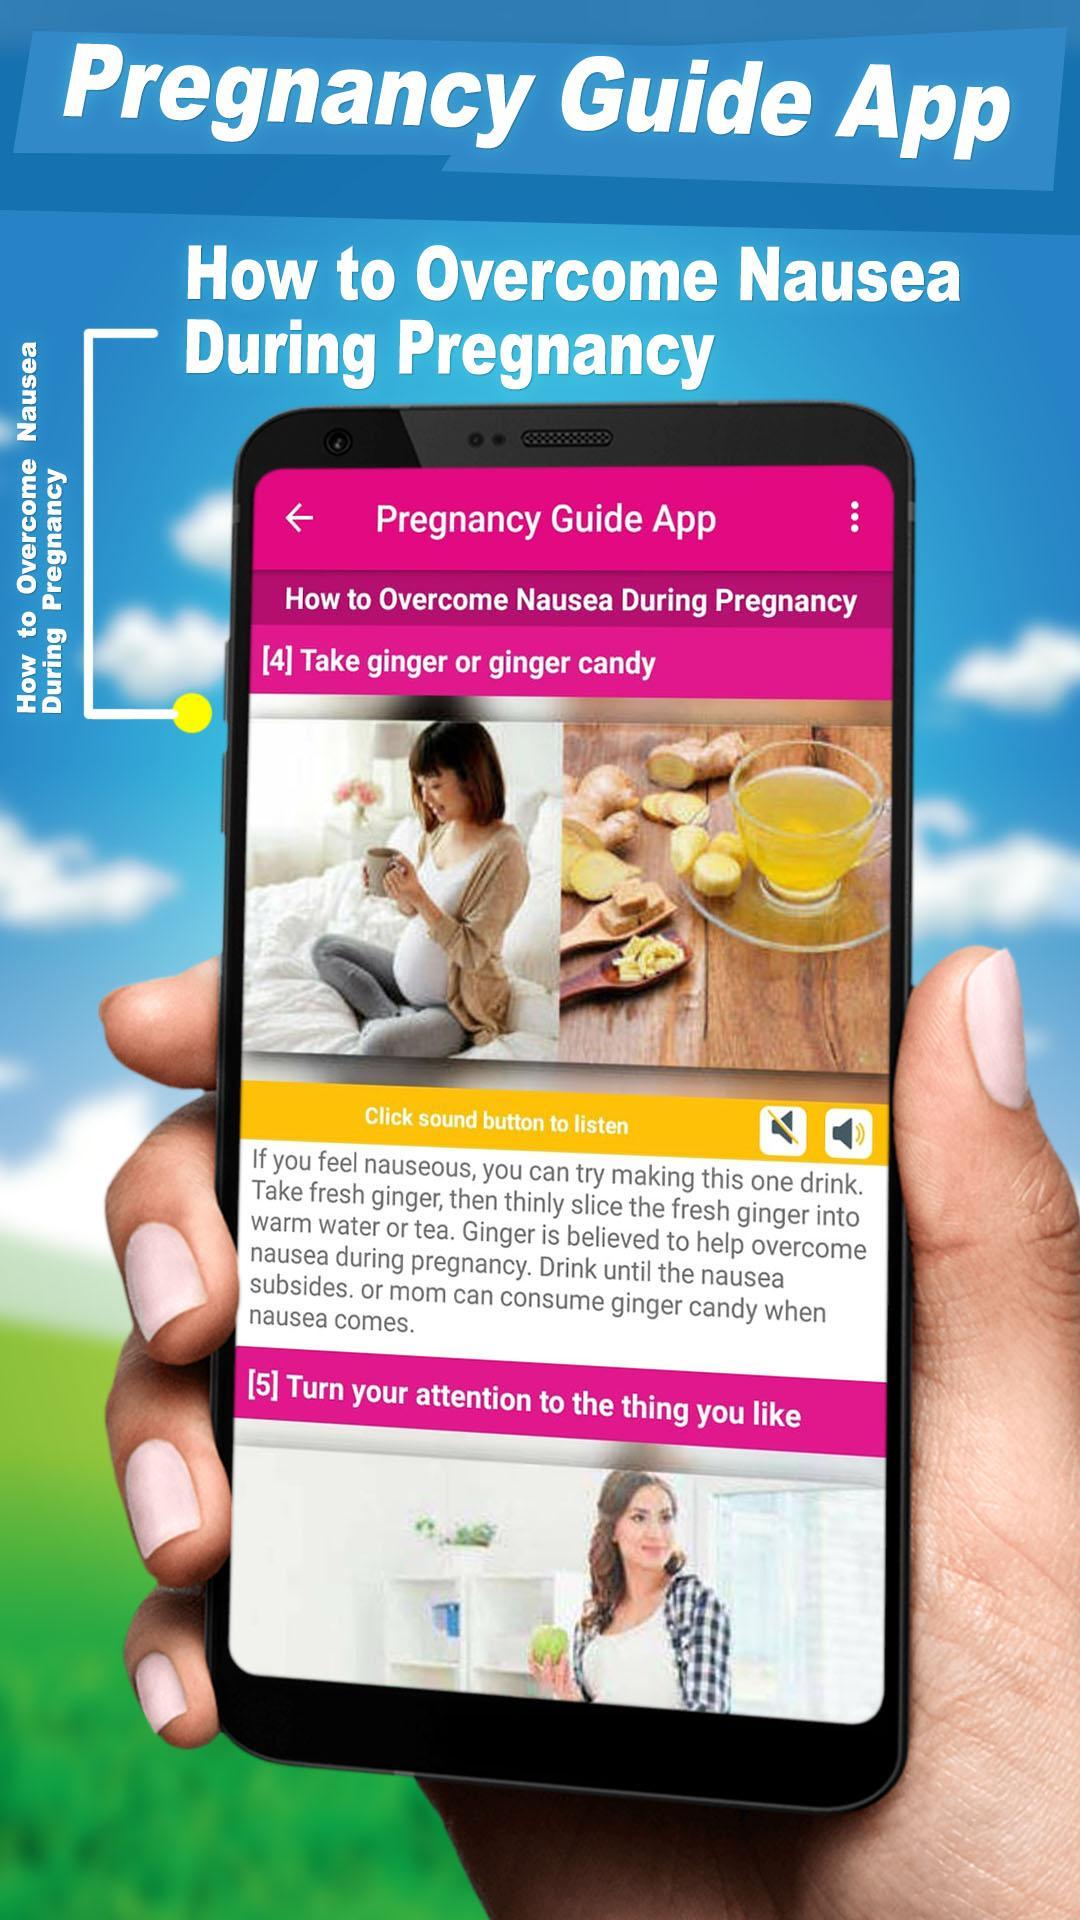 Pregnancy Guide App Pregnancy Guide App 4.0 Screenshot 6